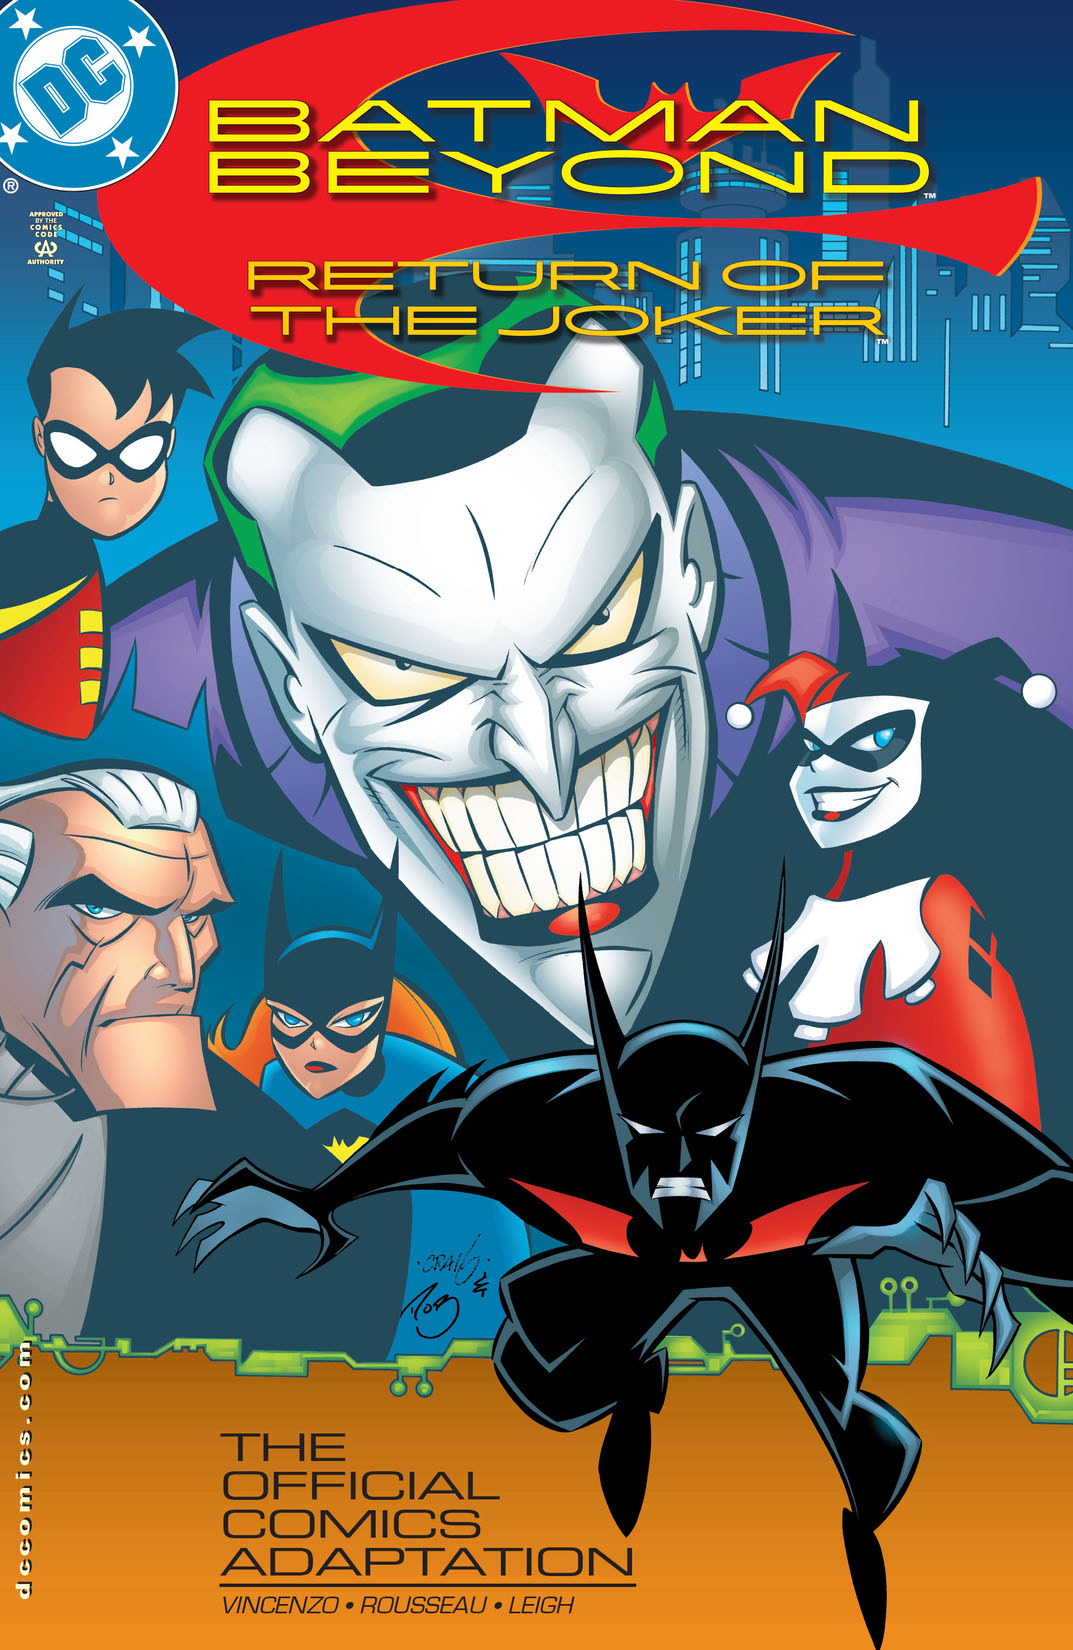 Batman Beyond: Return of the Joker #1 preview images